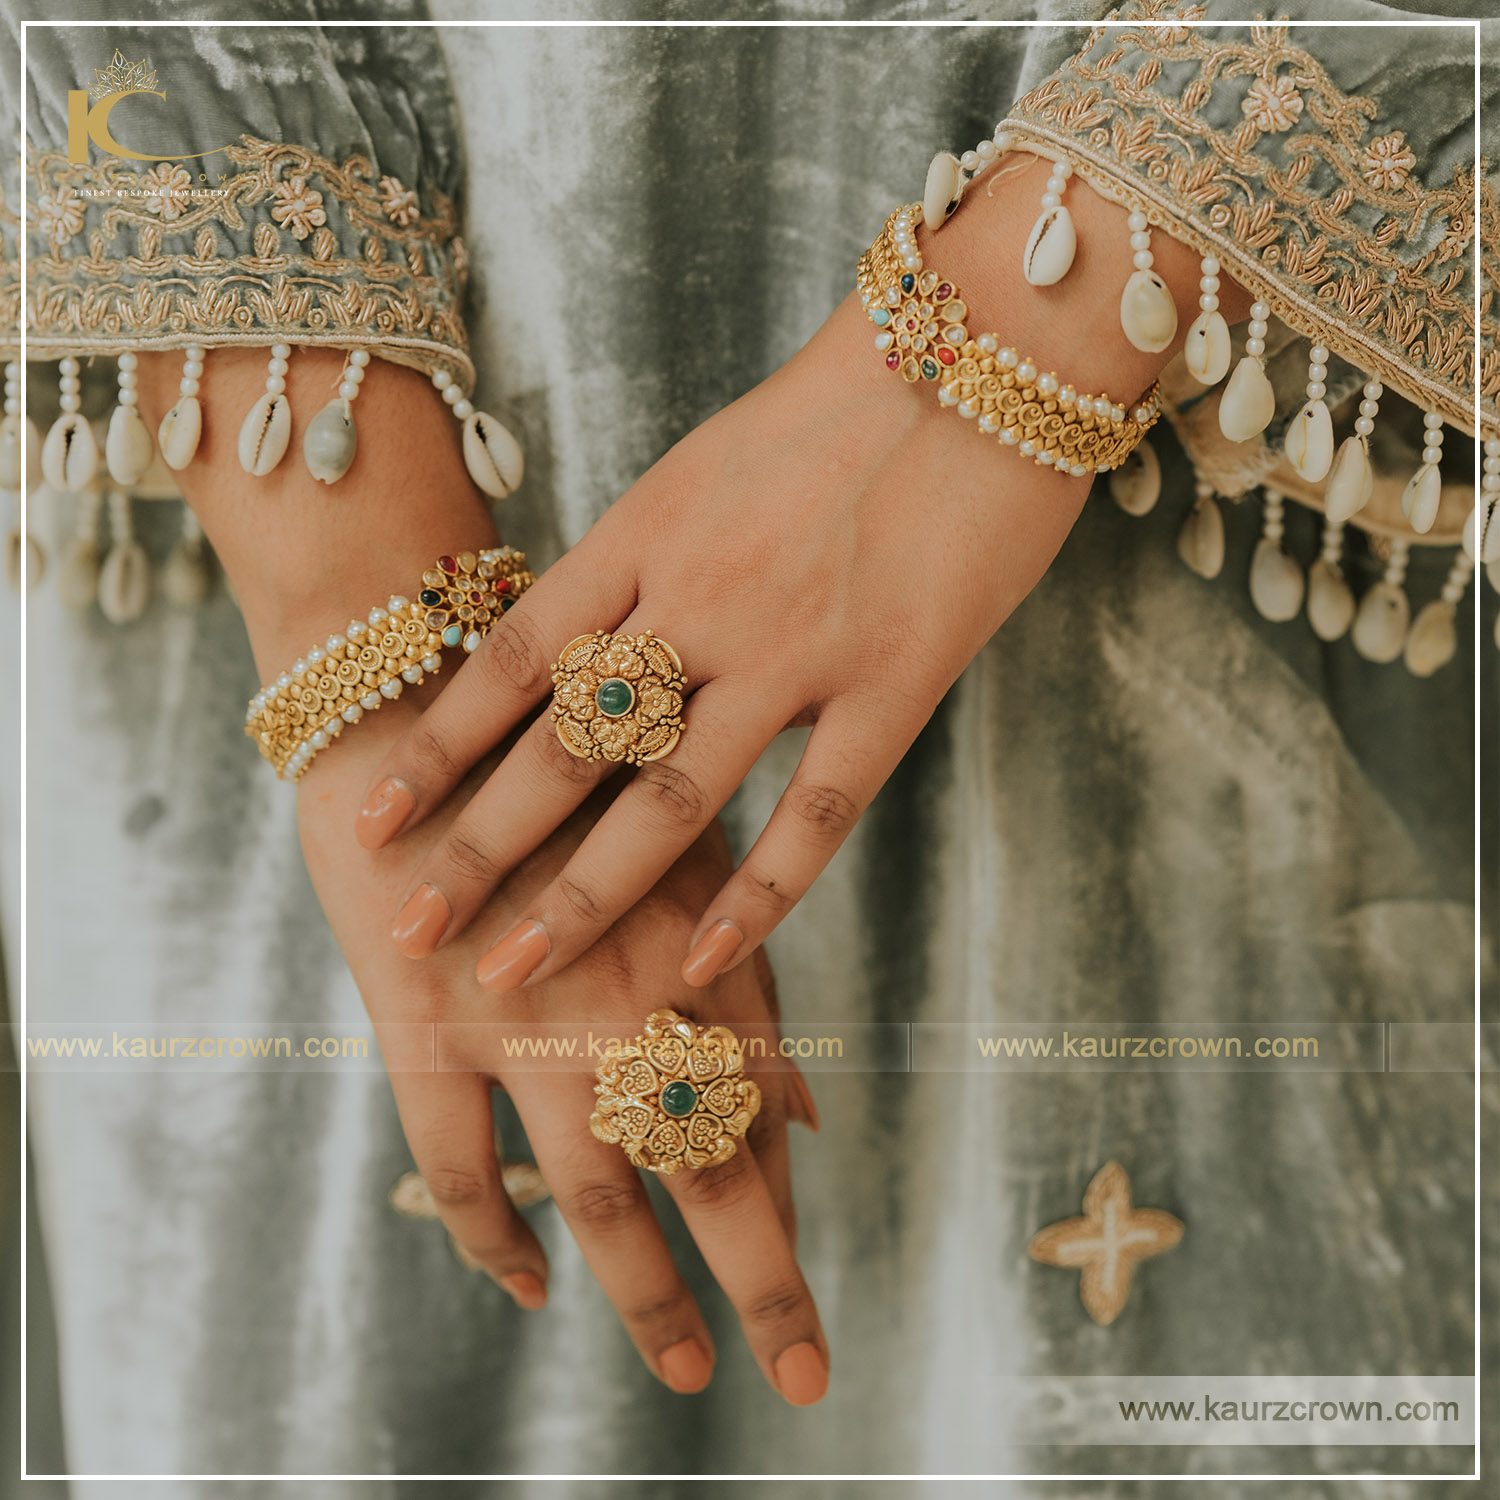 Large Adjustable Gold Statement Rings: Giraffe, Heart, Dragonfly Design  Boho Hippie Style Full Finger Ring - Etsy | Fashion rings boho, Gold  statement ring, Statement rings